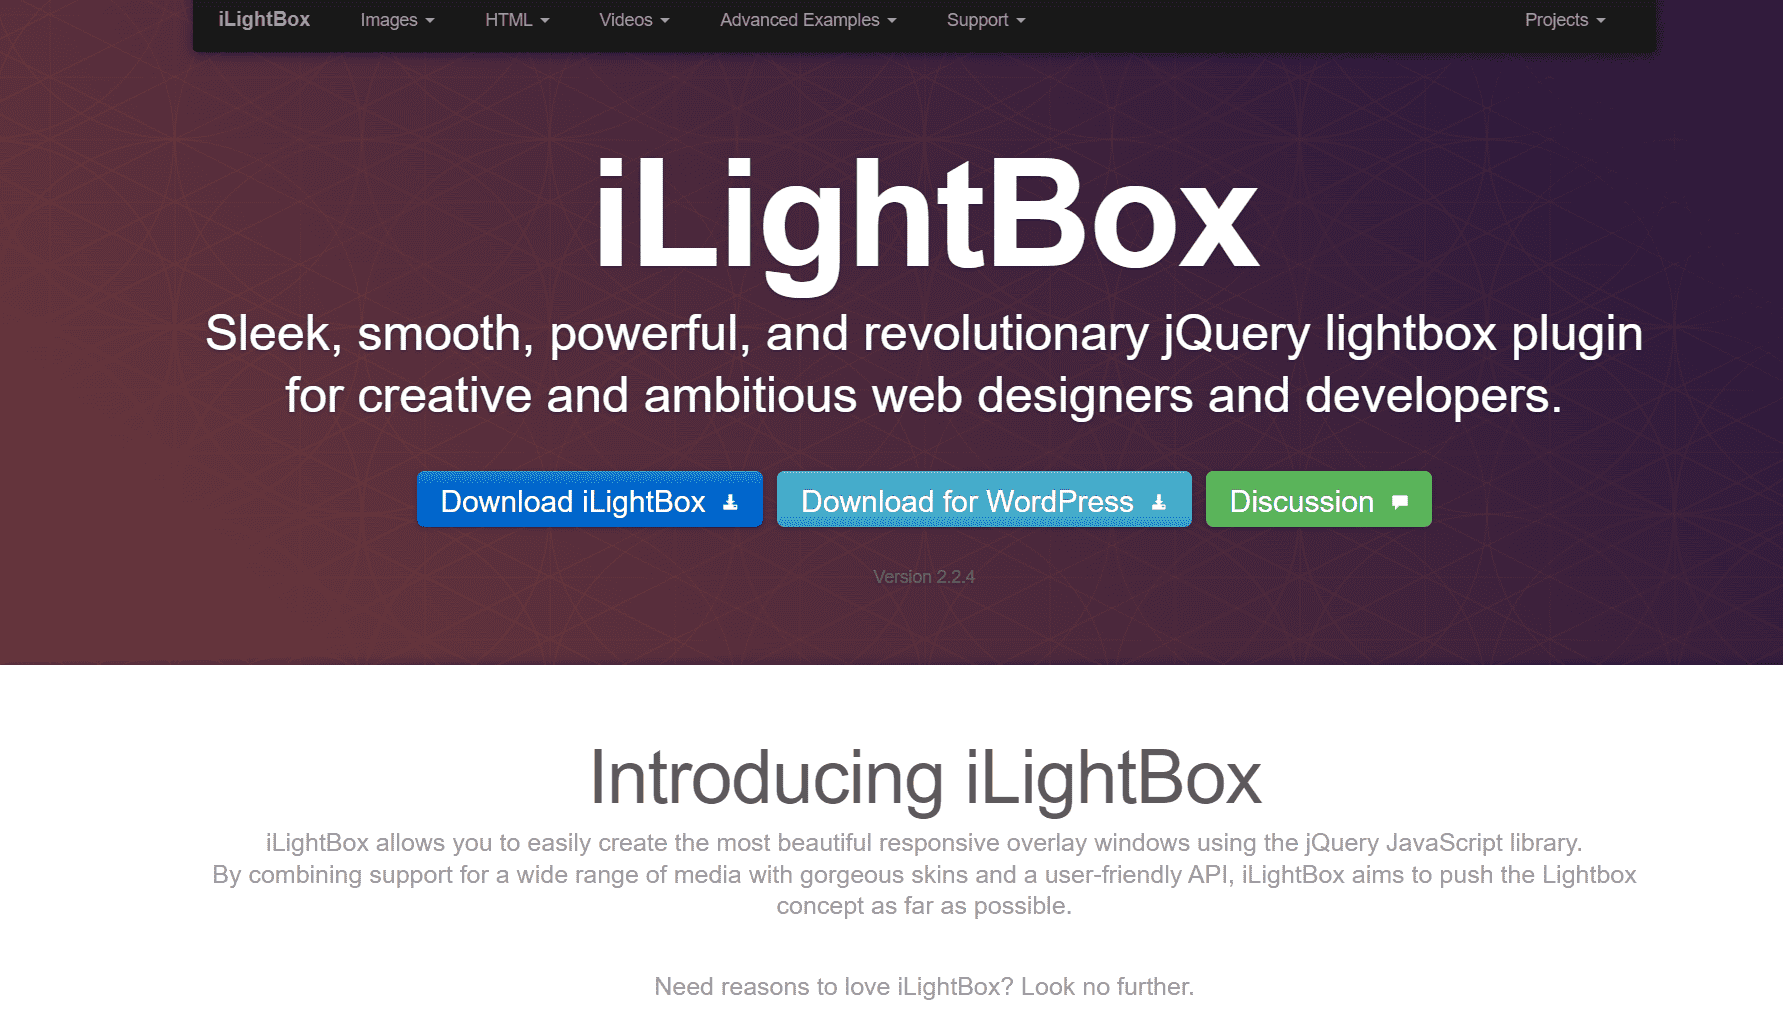 iLightBox